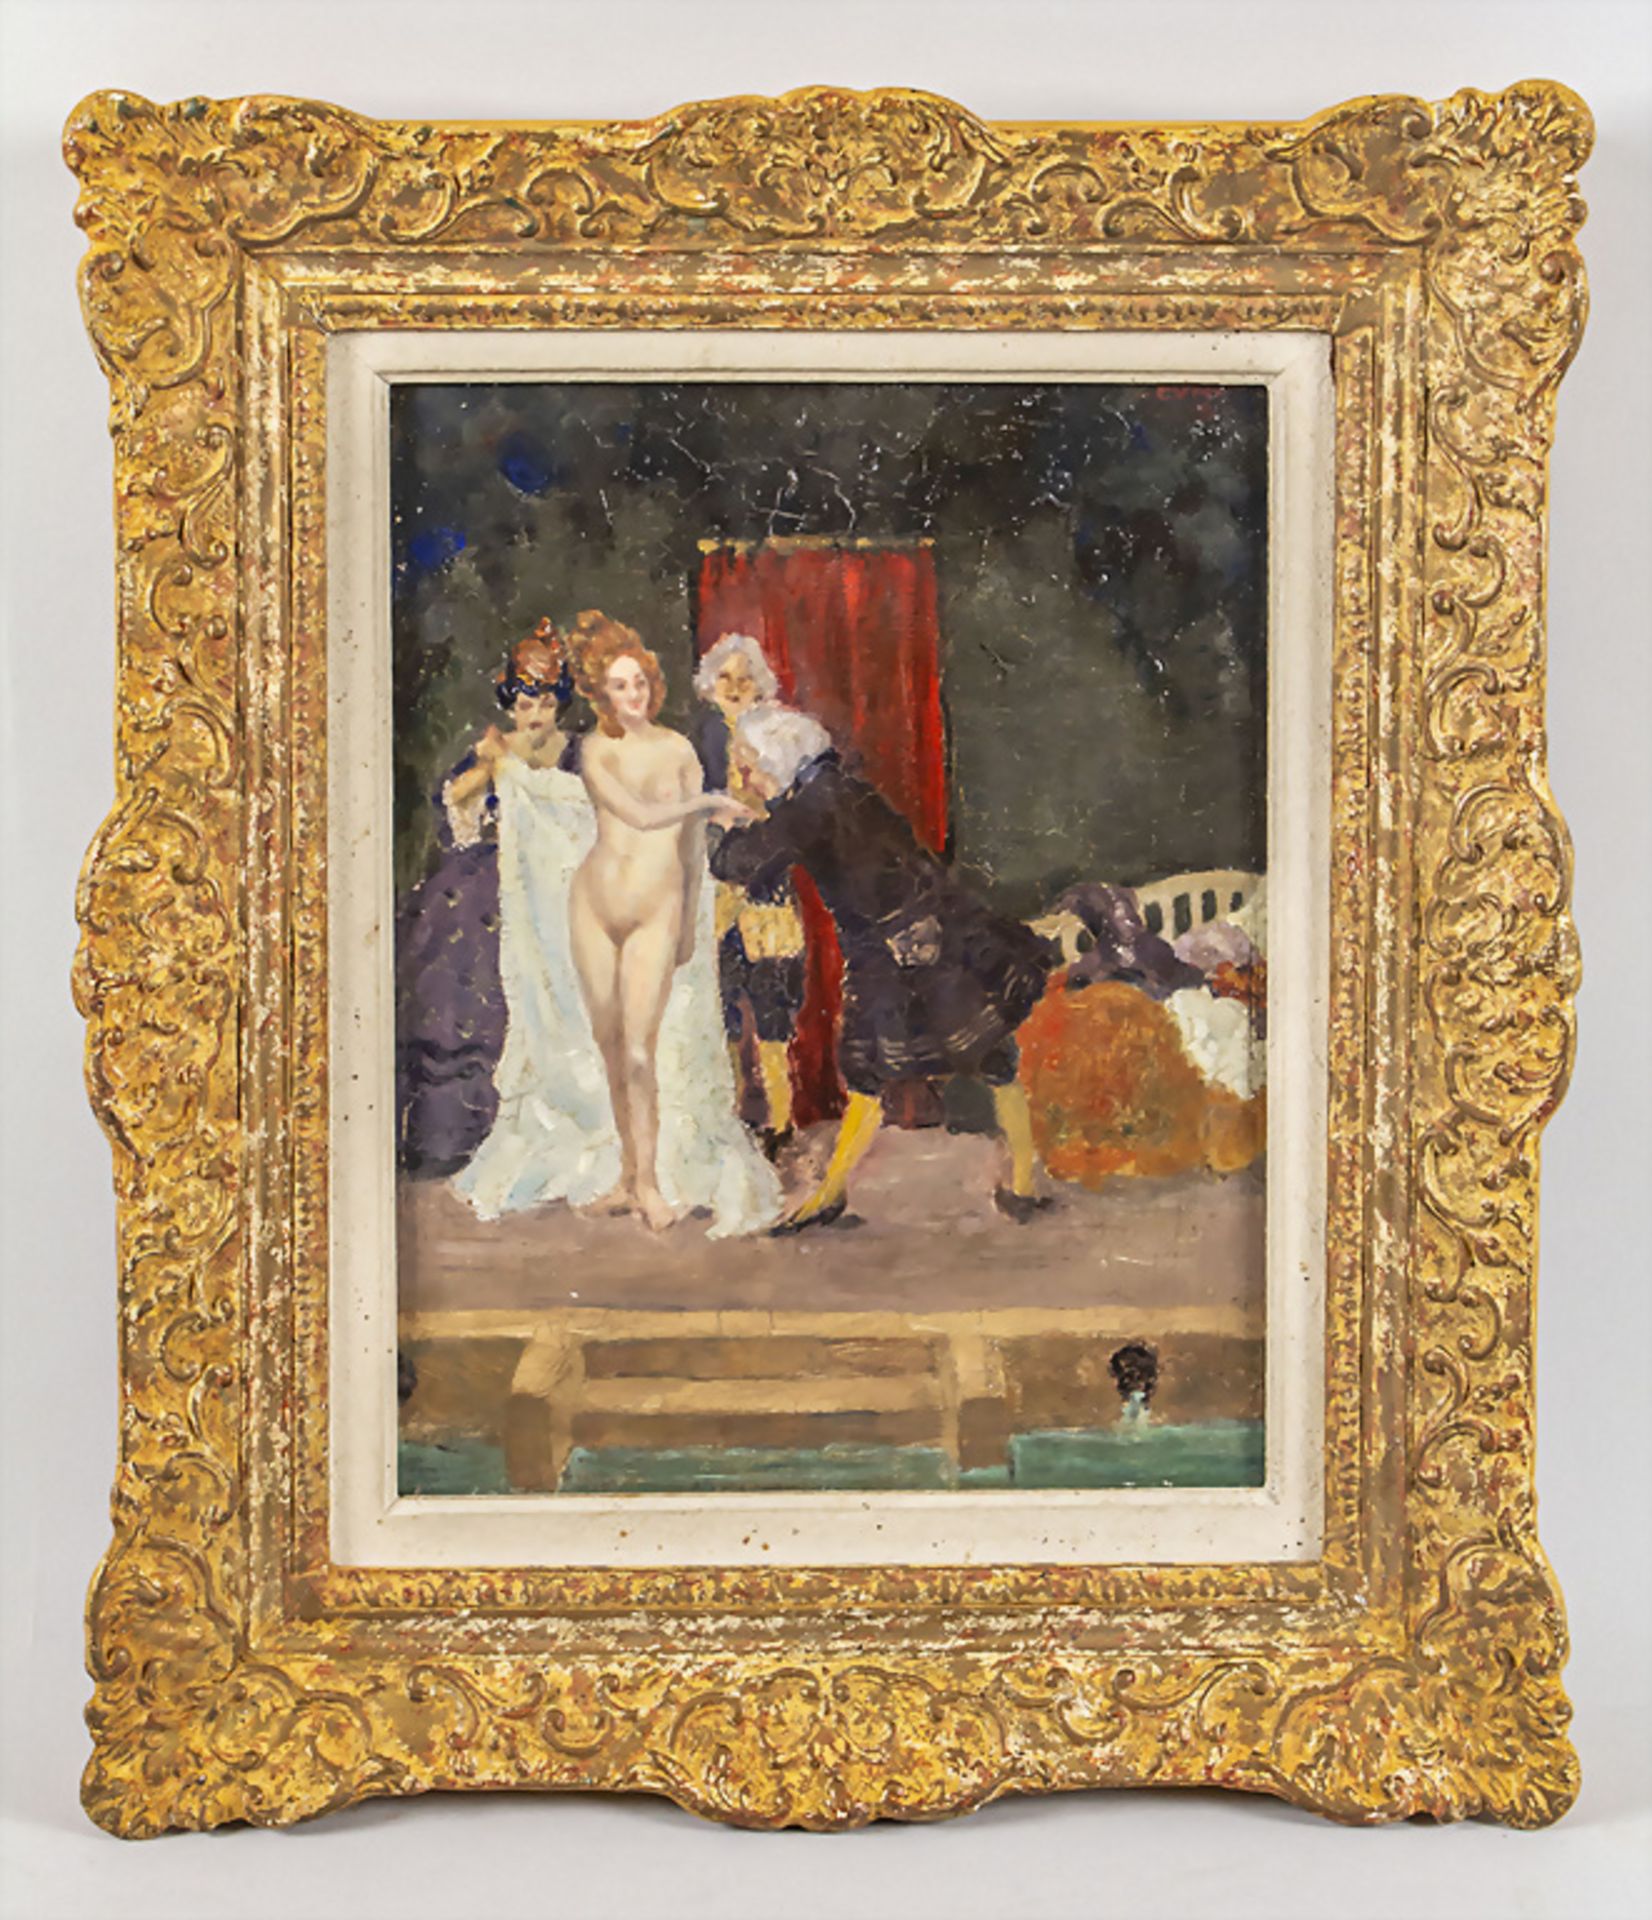 Cuno AMIET (1868-1961), 'Vor dem Bade' / 'Before the bath', 1908 - Image 2 of 3